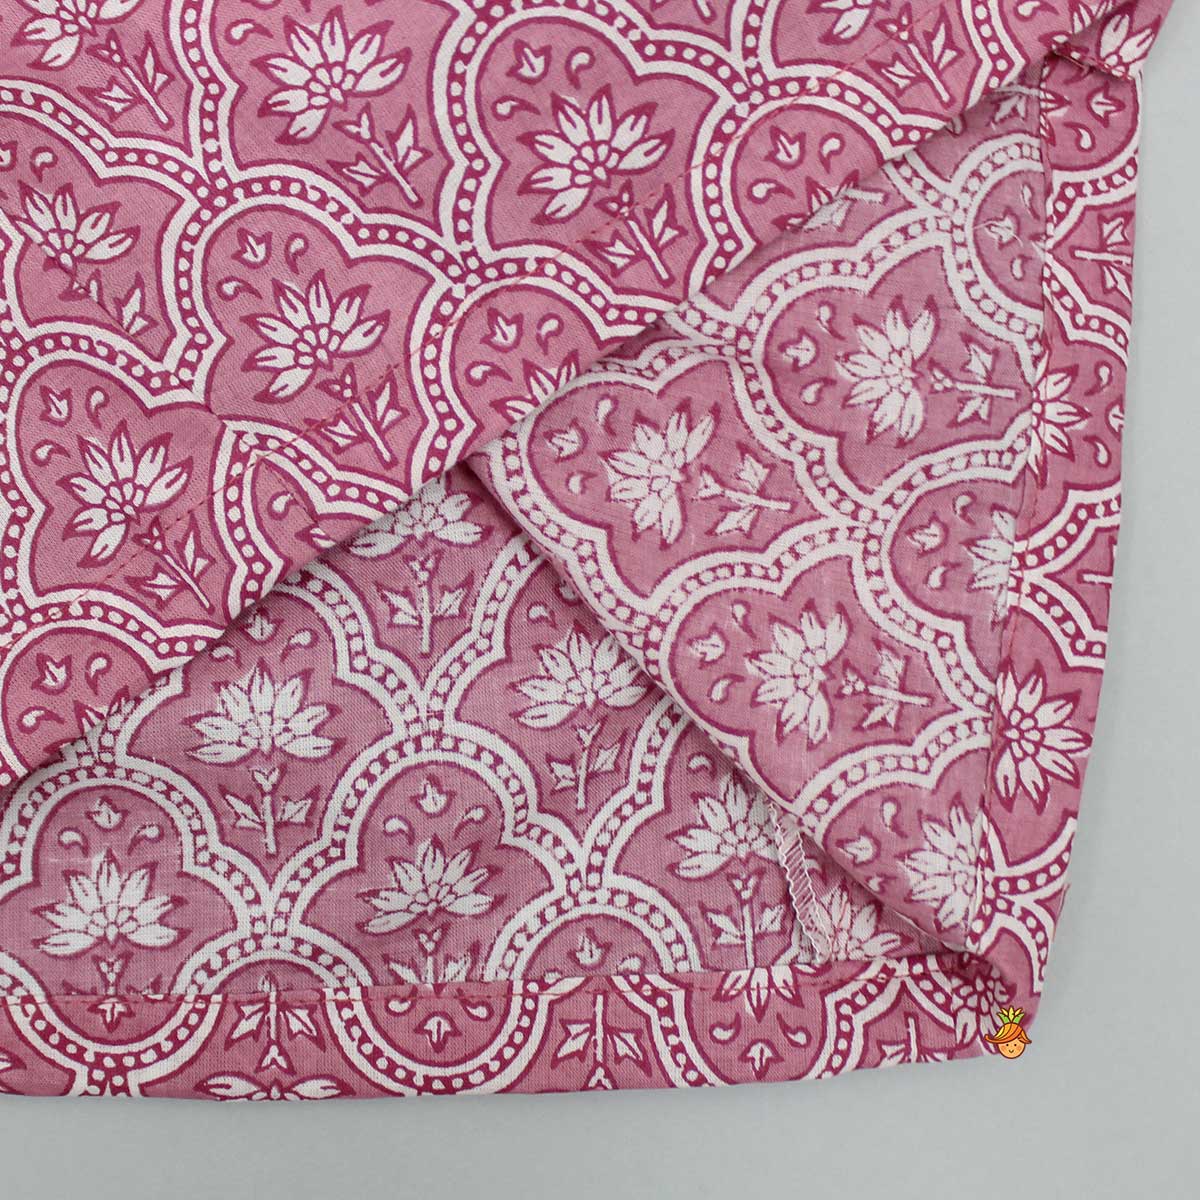 Floral Printed Pink Top And Pant